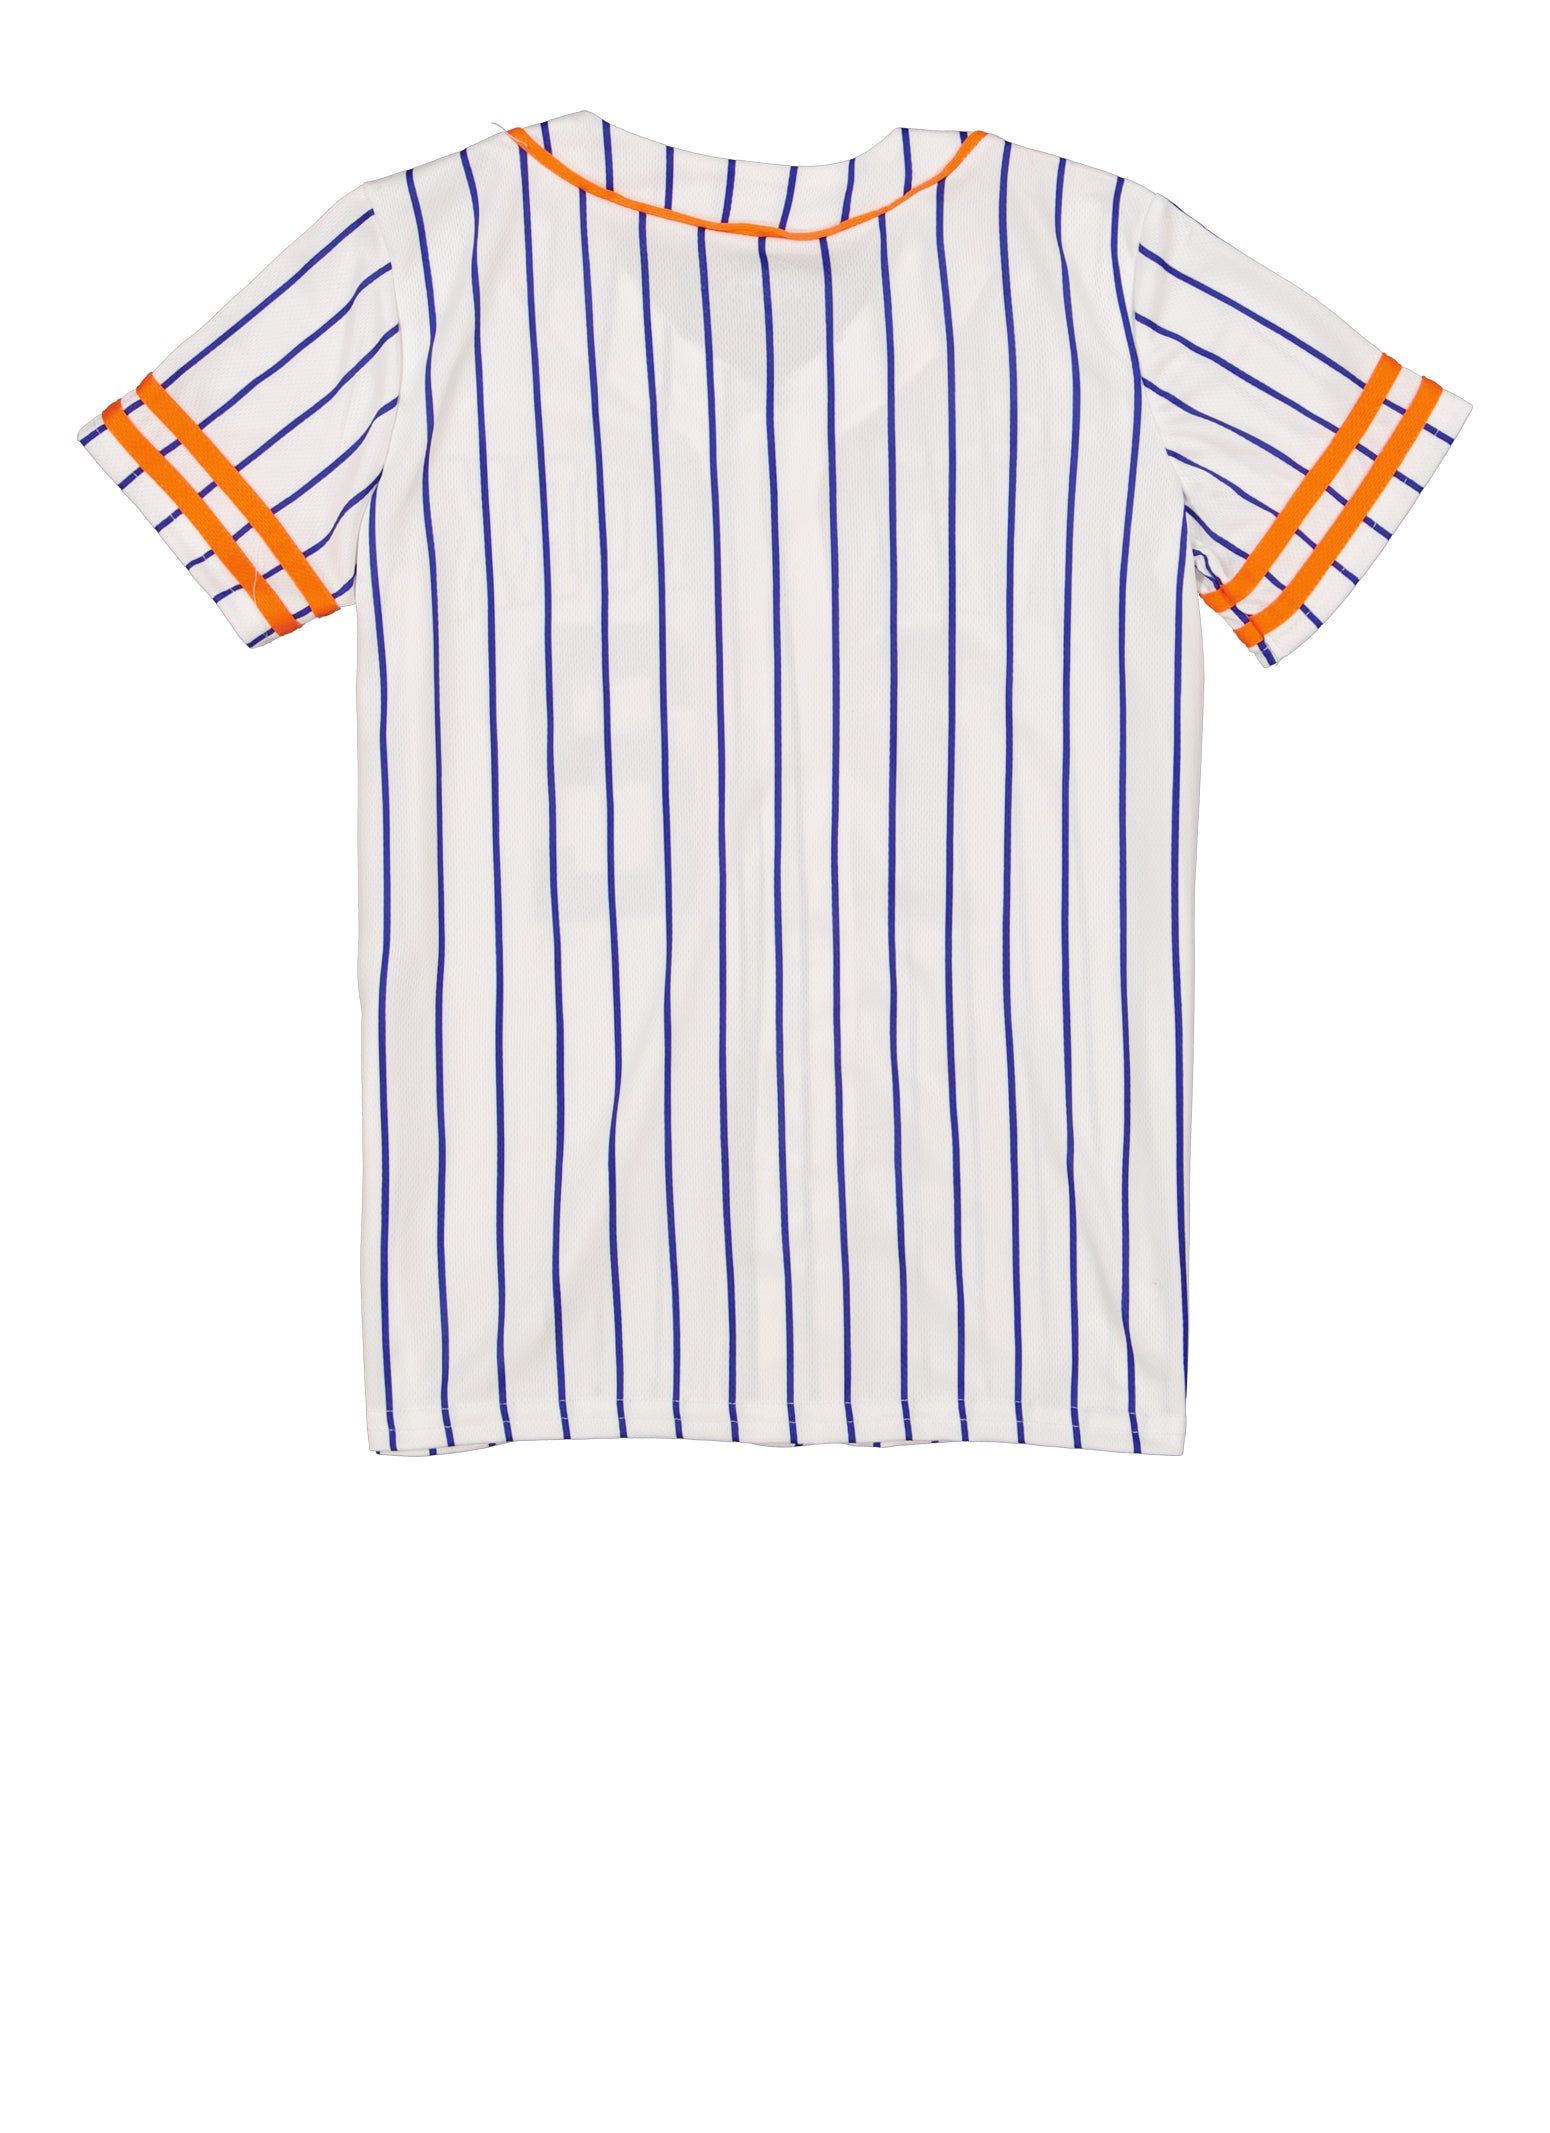 Boys Varsity Striped New York Graphic Baseball Jersey, White, Size 10-12